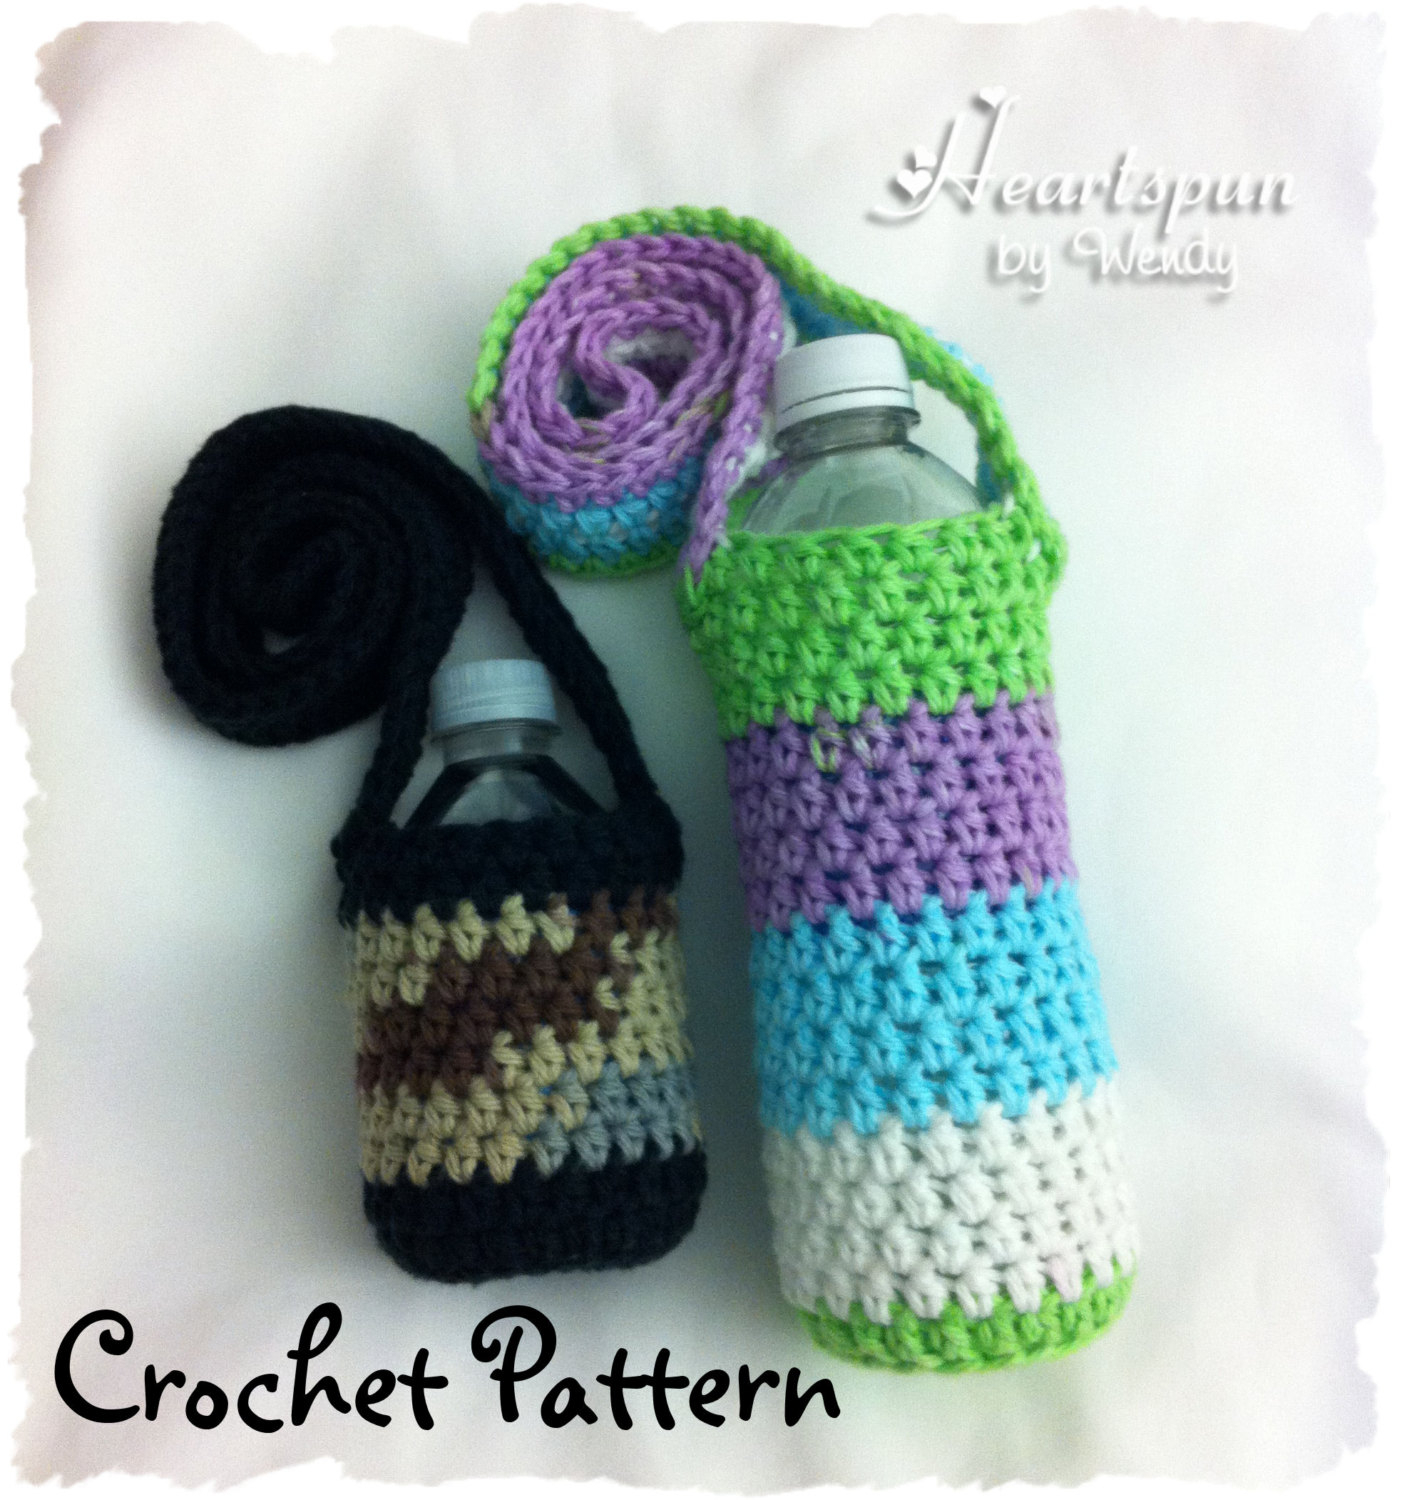 Crochet Bottle Holder Pattern Crochet Pattern To Make A Changing Colors Water Bottle Holder Etsy